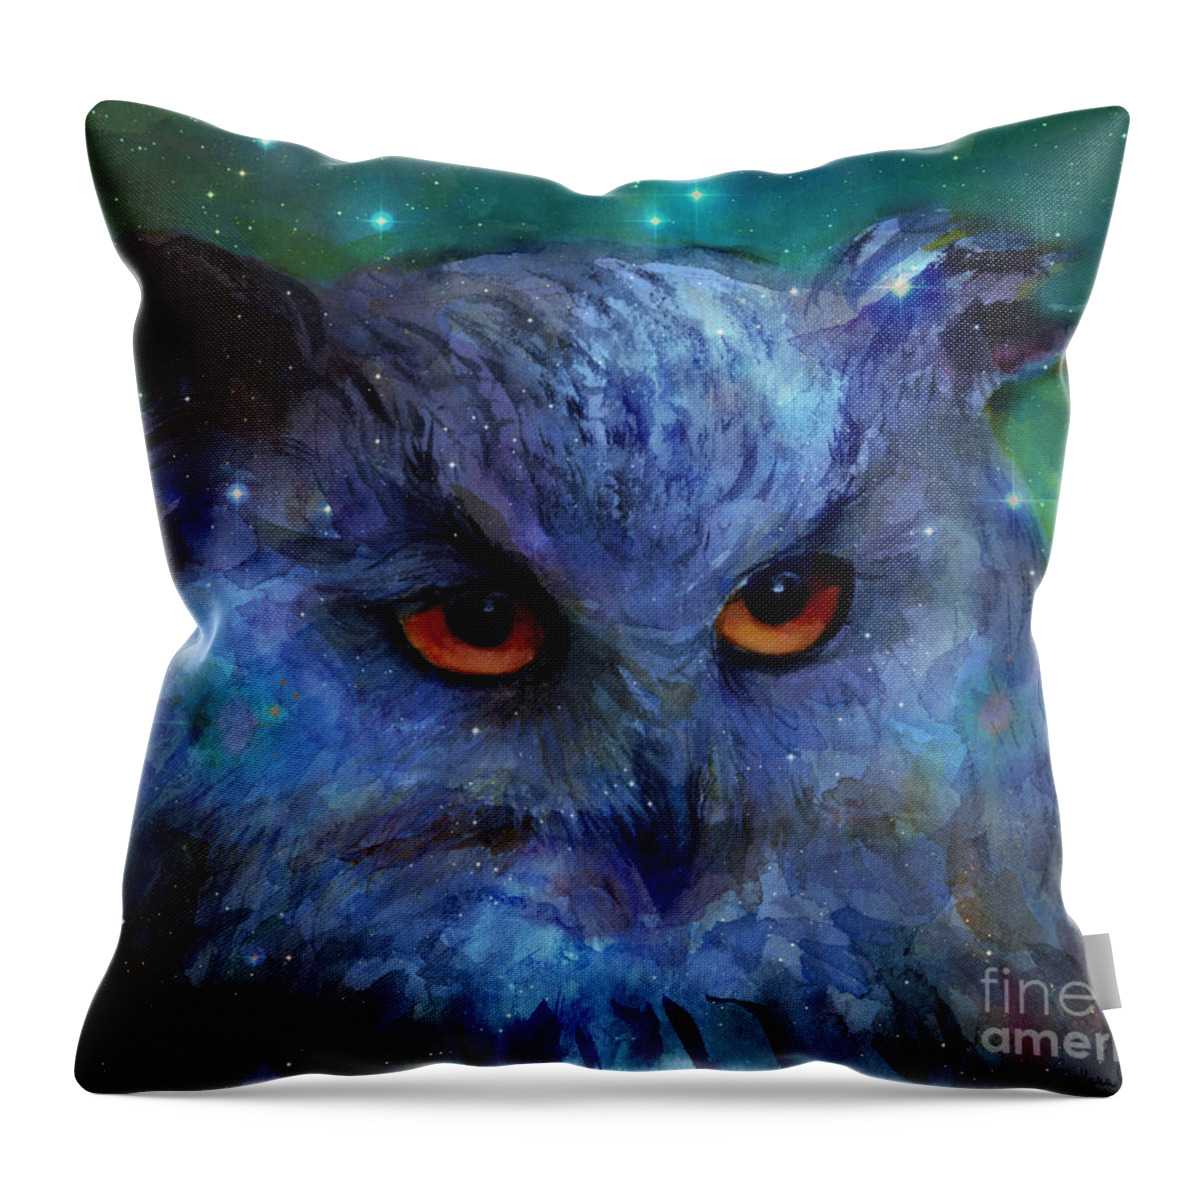 Owl Throw Pillow featuring the painting Cosmic Owl painting by Svetlana Novikova